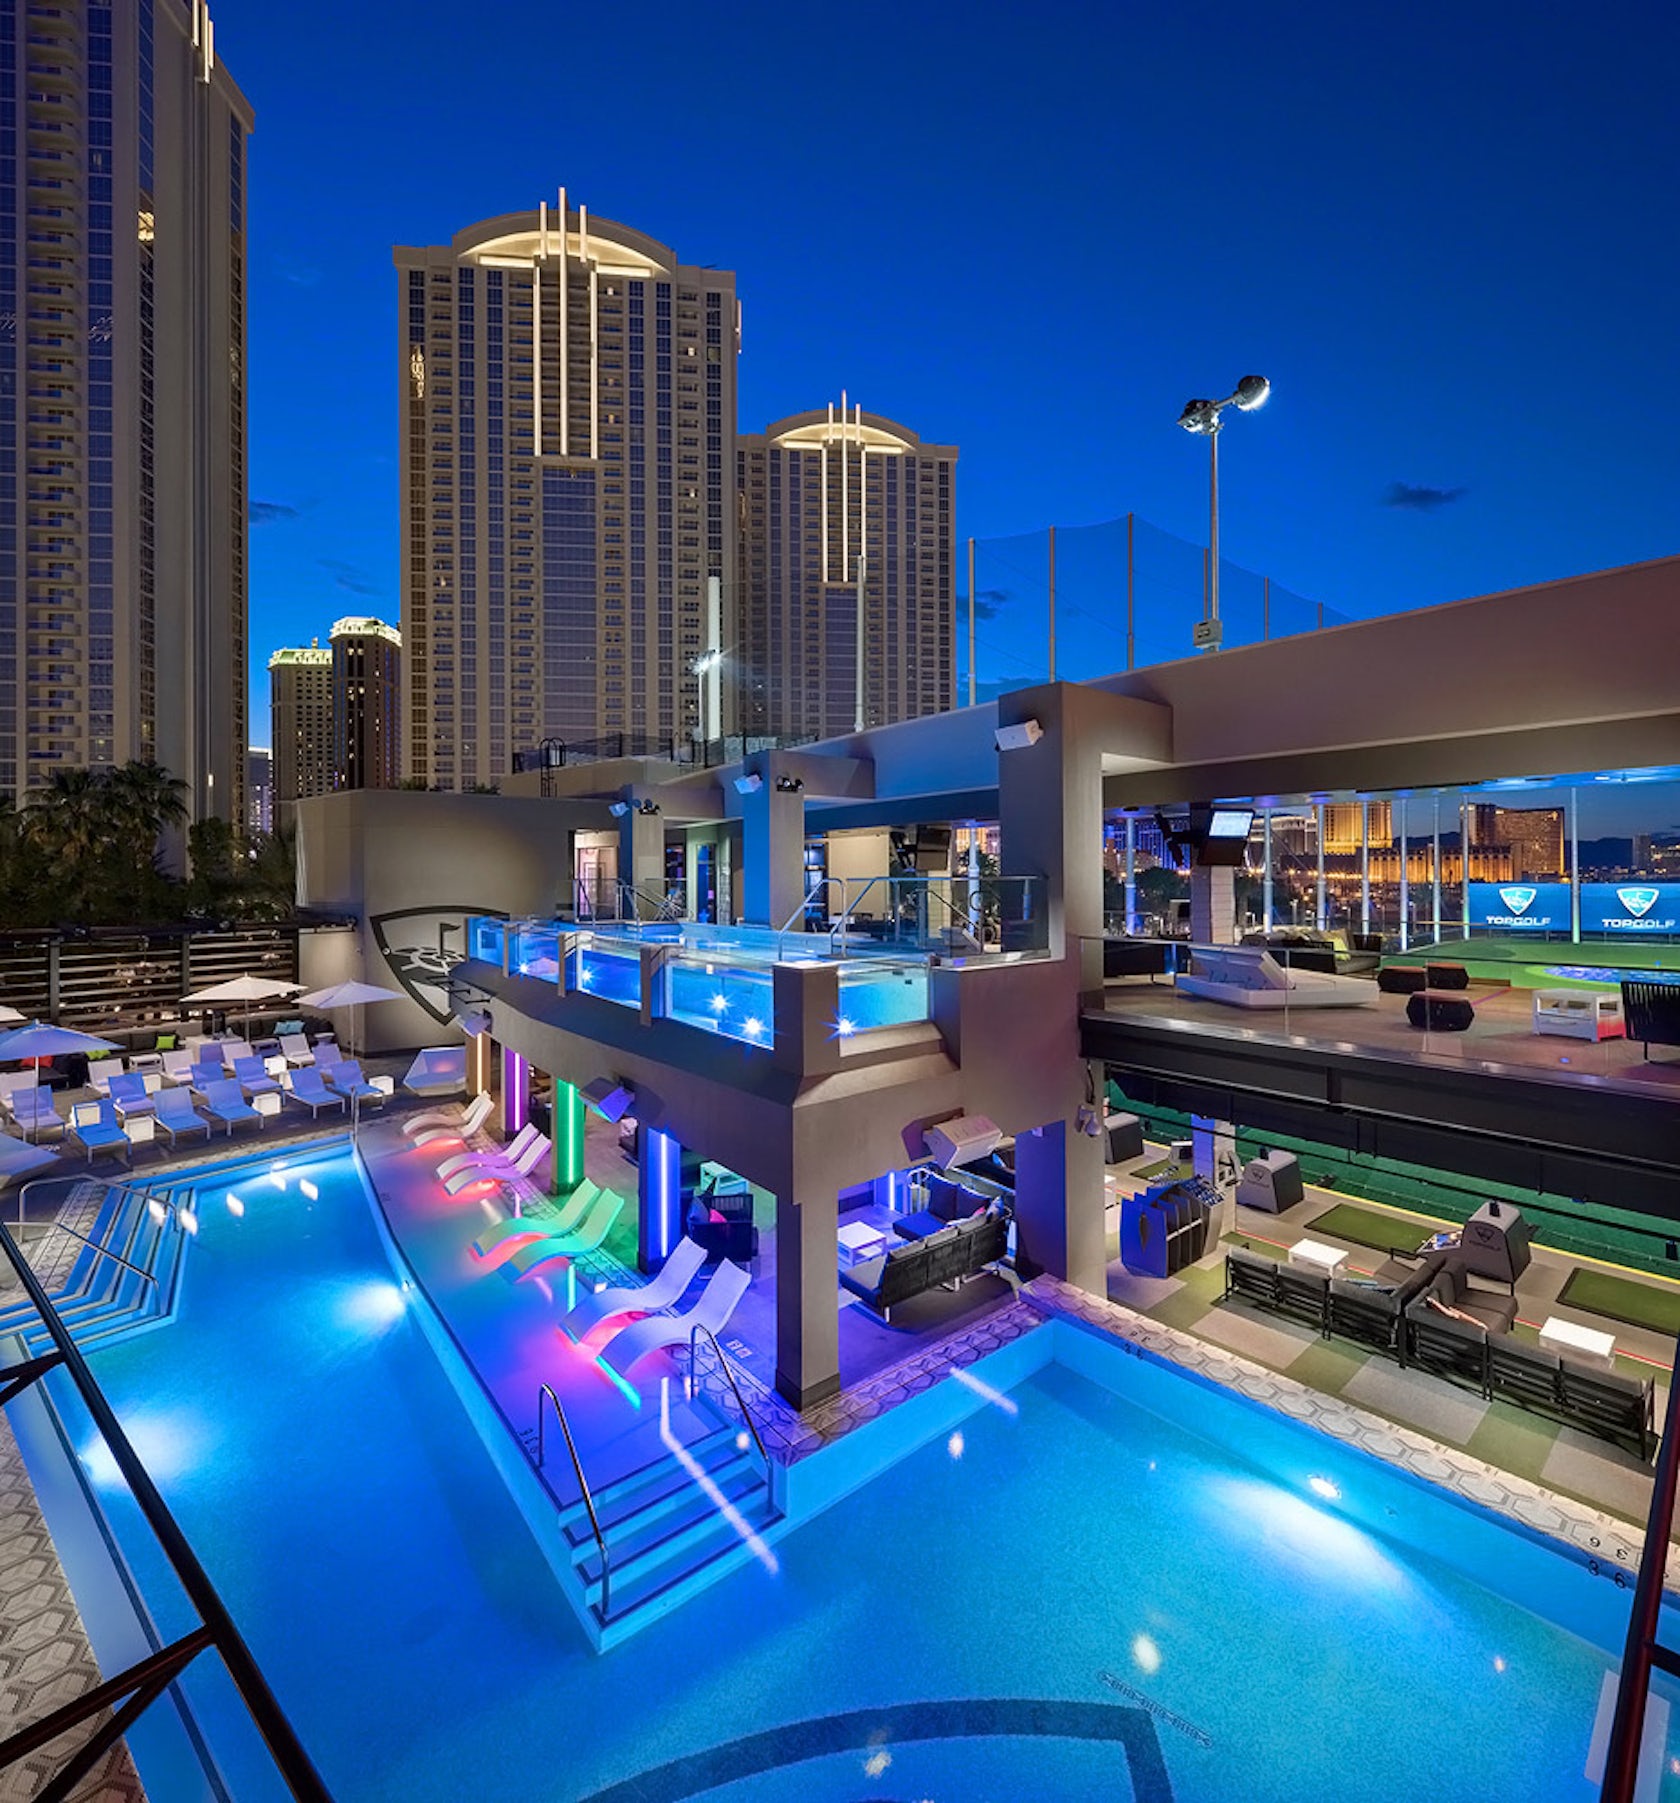 Topgolf Las Vegas by YWS Design & Architecture - Architizer